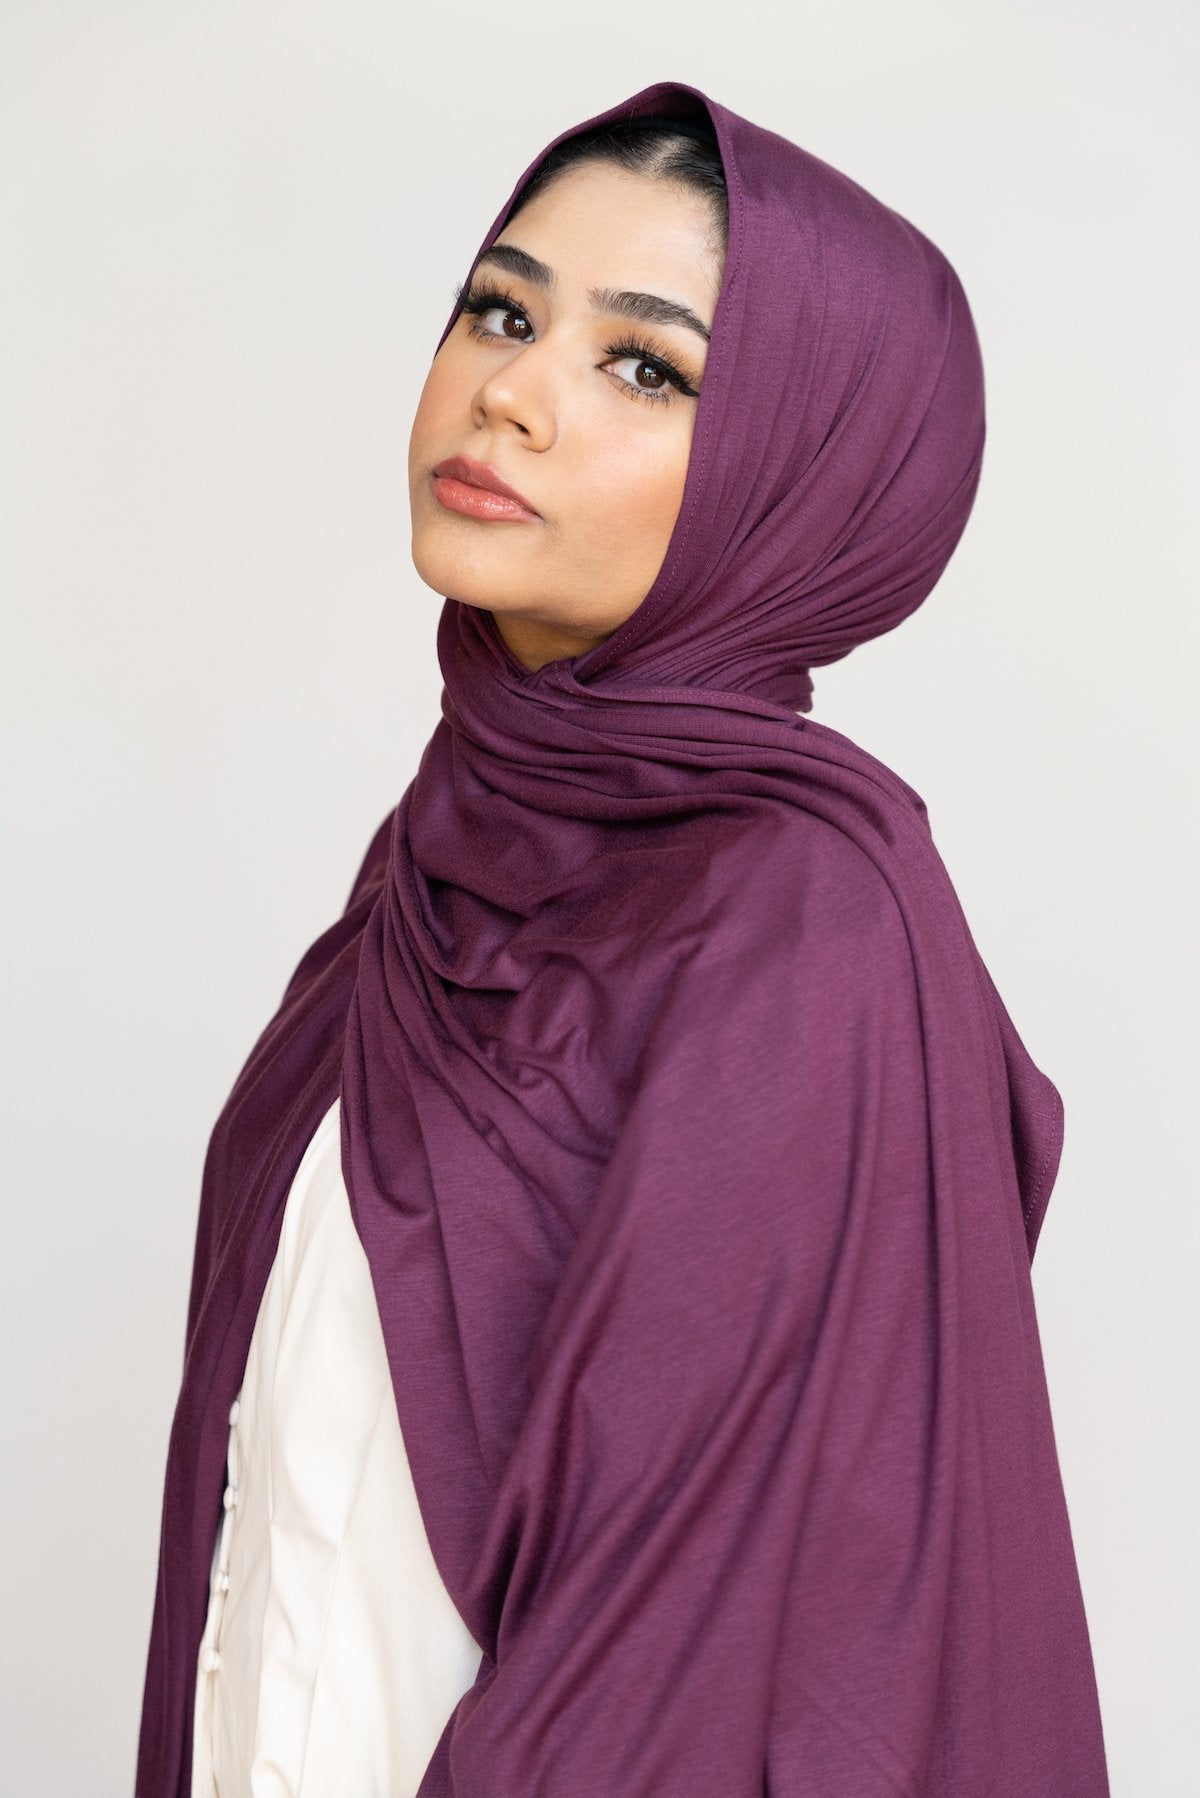 ROYAL PURPLE Premium Jersey-AllScarves-Niswa Fashion